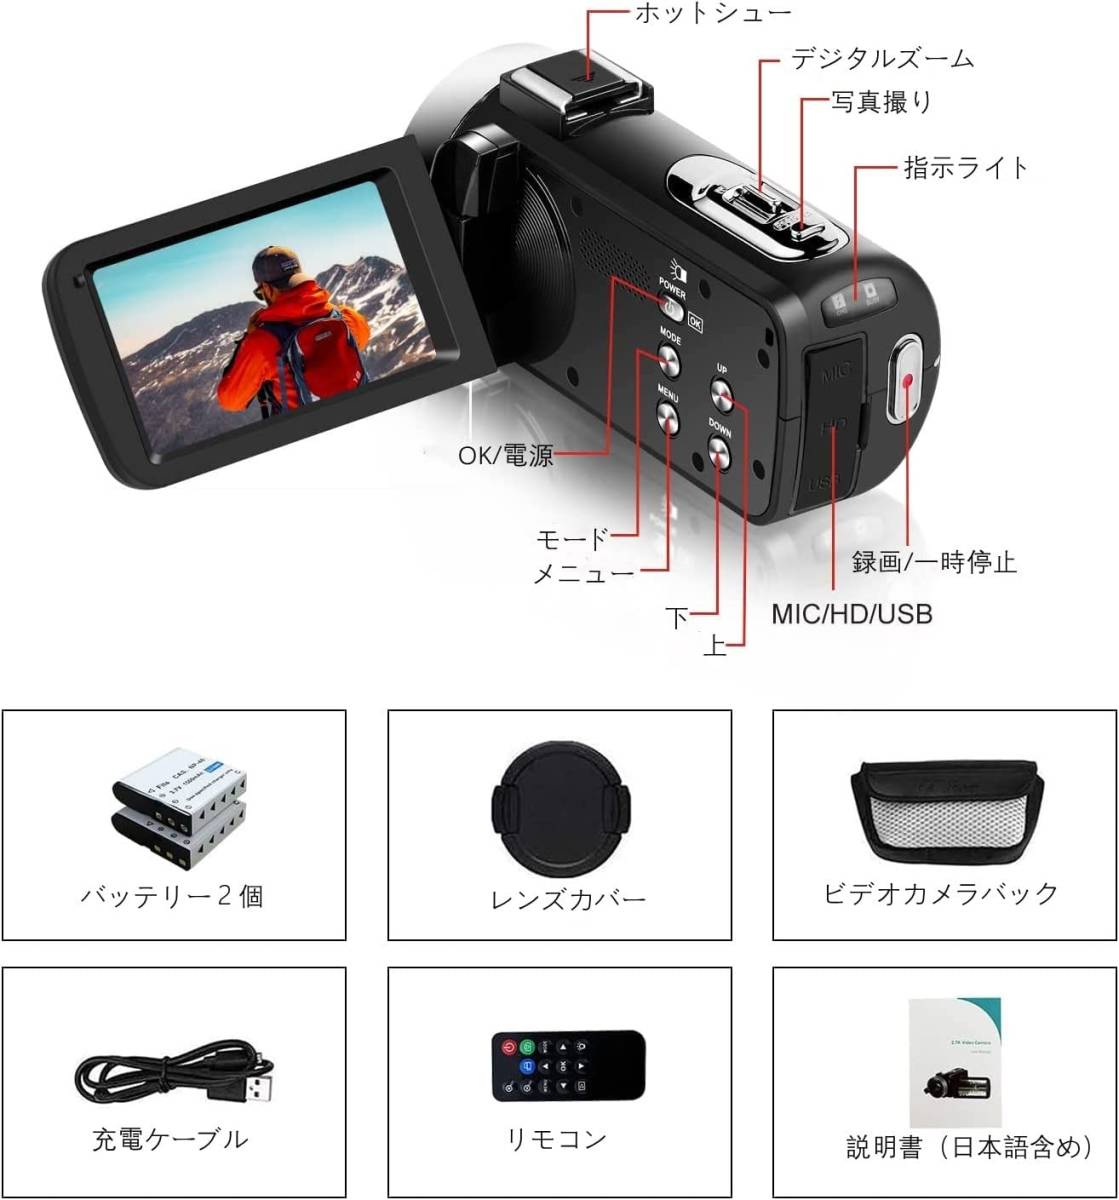  【2.7K】コンパクトビデオカメラ 予備バッテリー２個 HDMI出力 16倍ズーム 30FPS ナイトビジョン 3インチモニター ウェブカメラの画像2